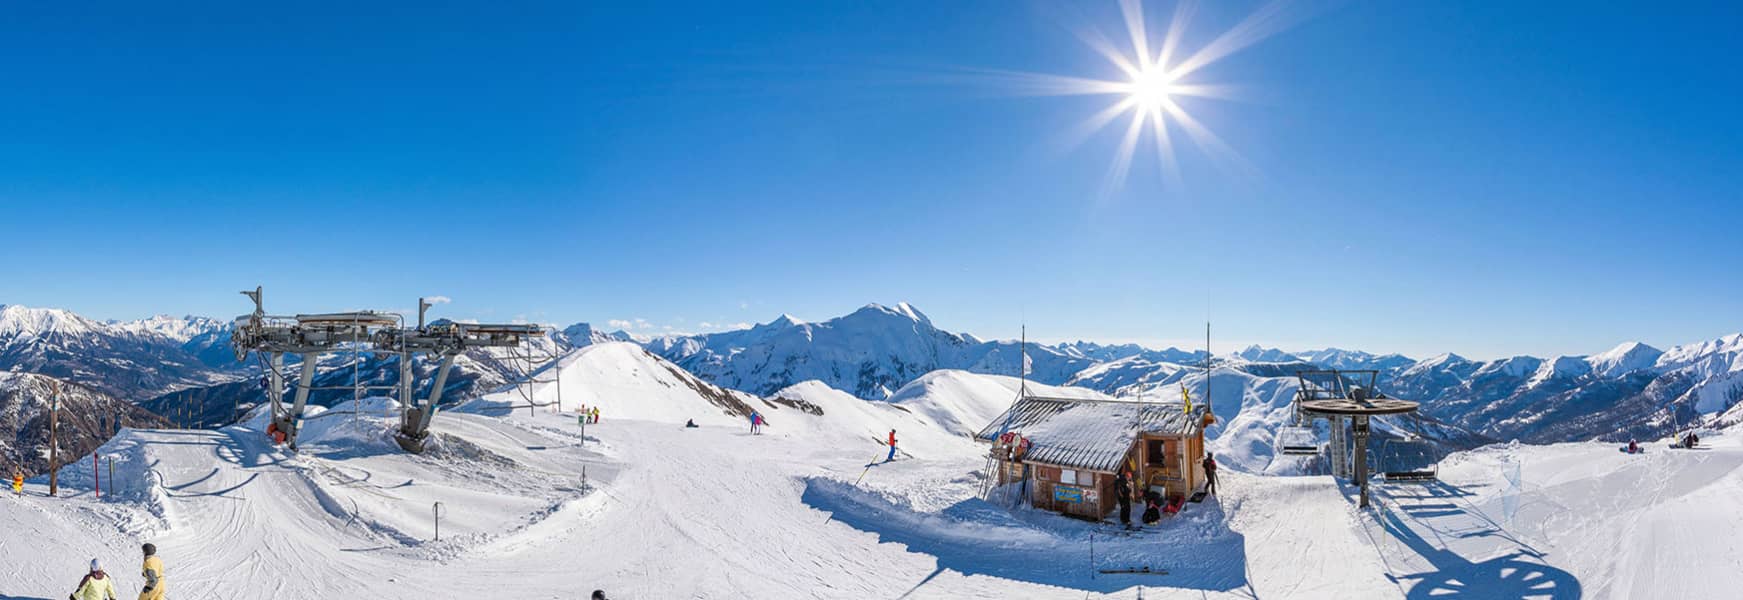 Location Ski Intersport La Foux d'Allos